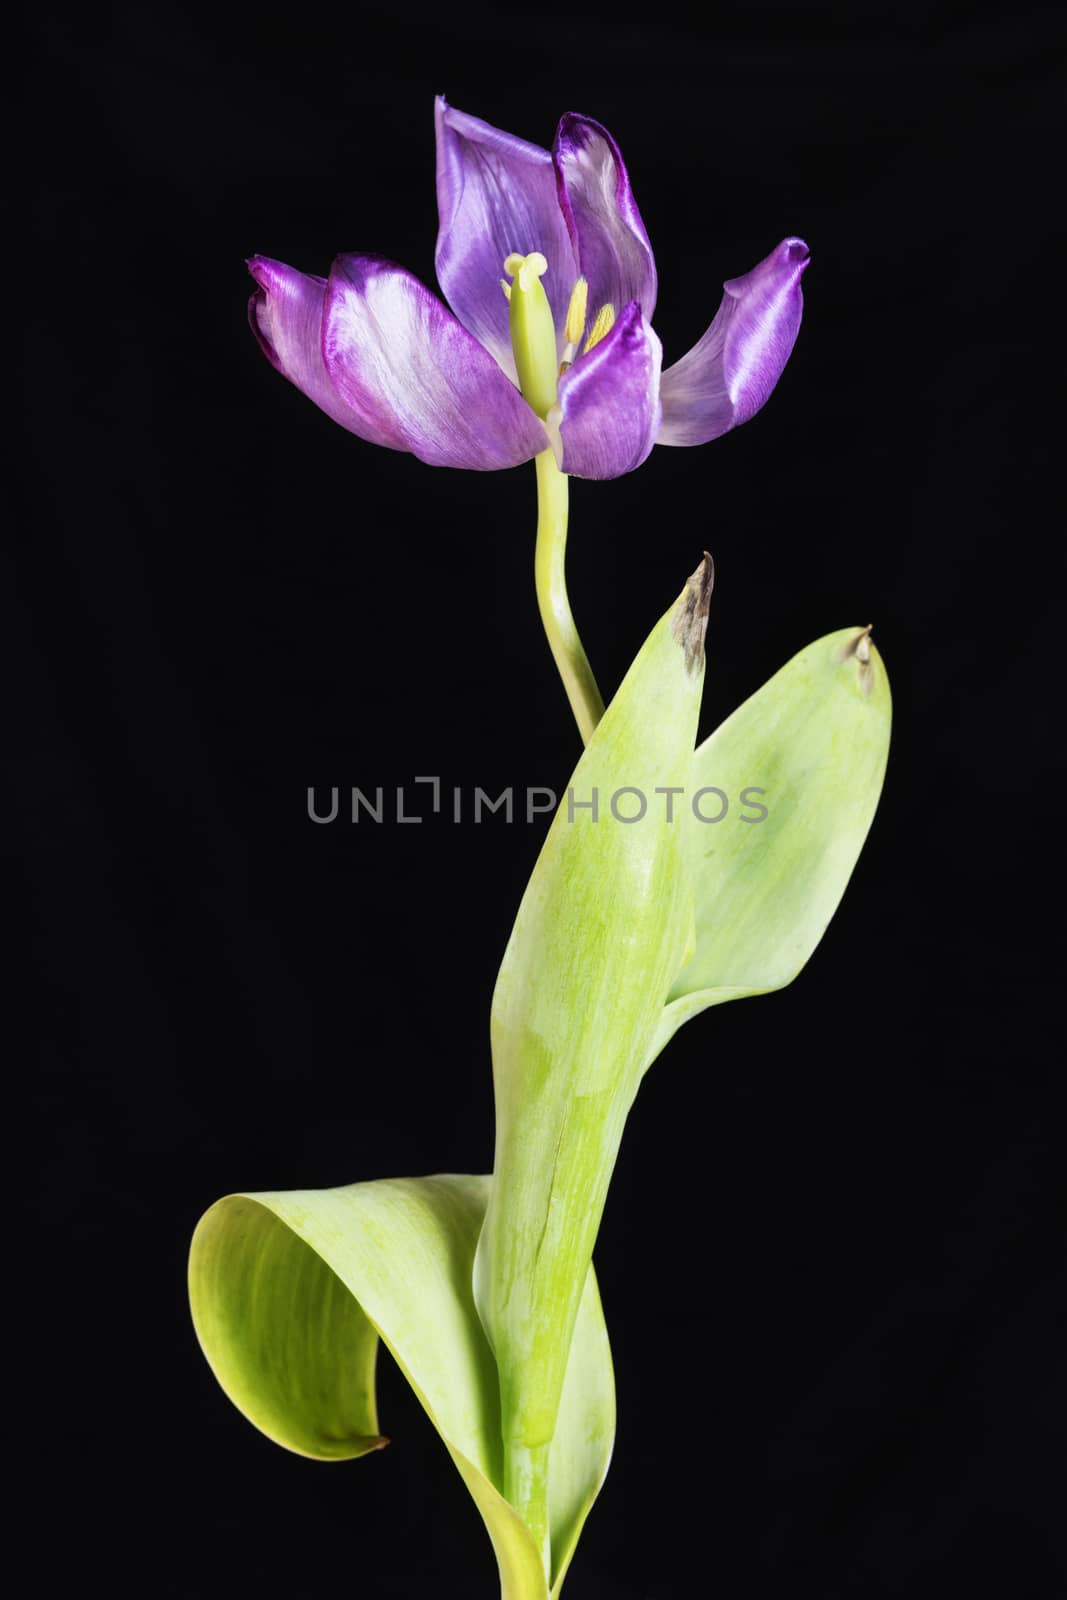 Tulip in bloom on black background by victimewalker